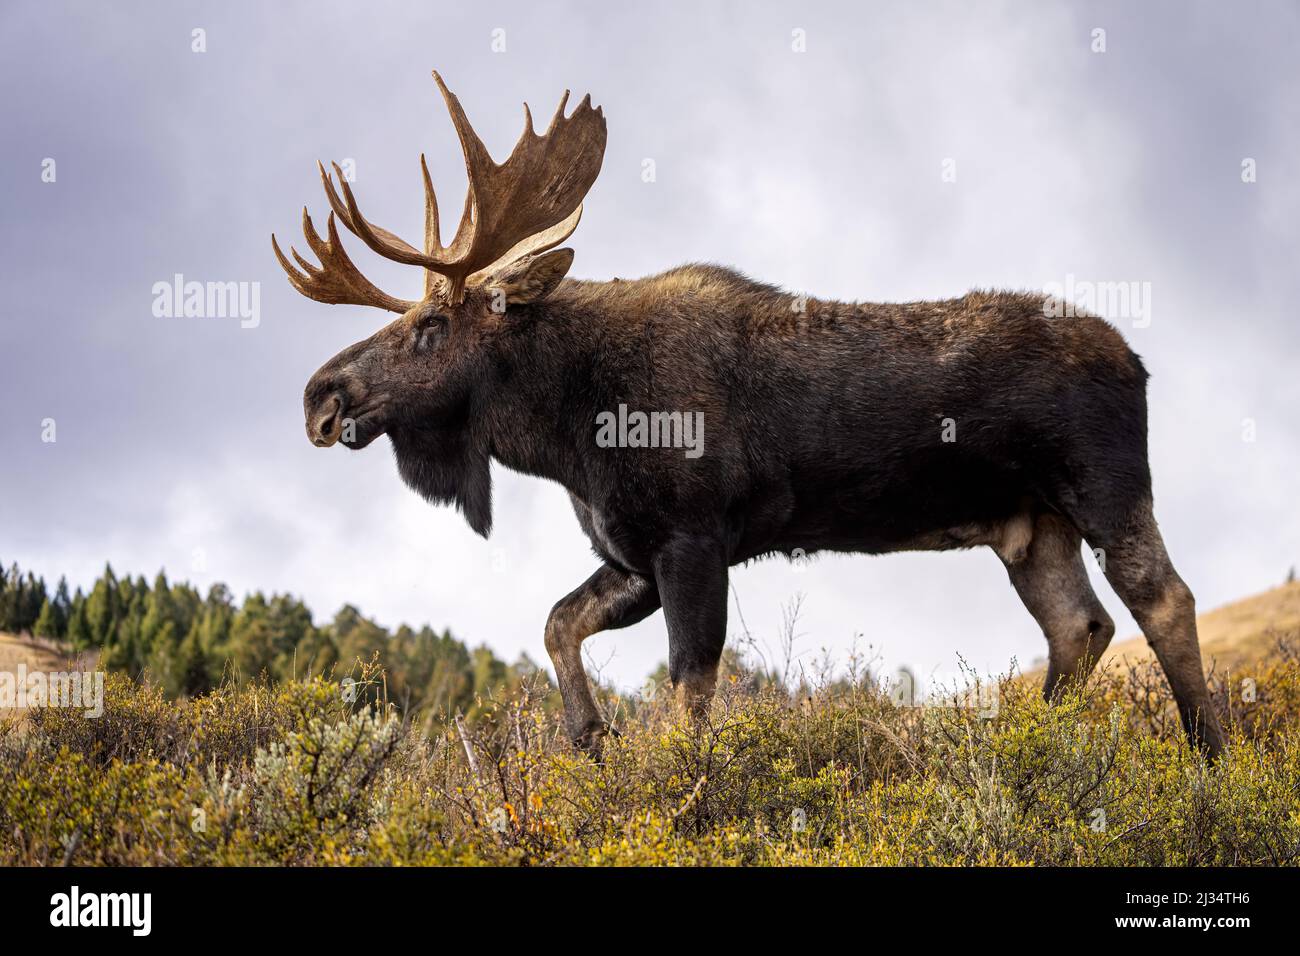 Bull Moose Stock Photo